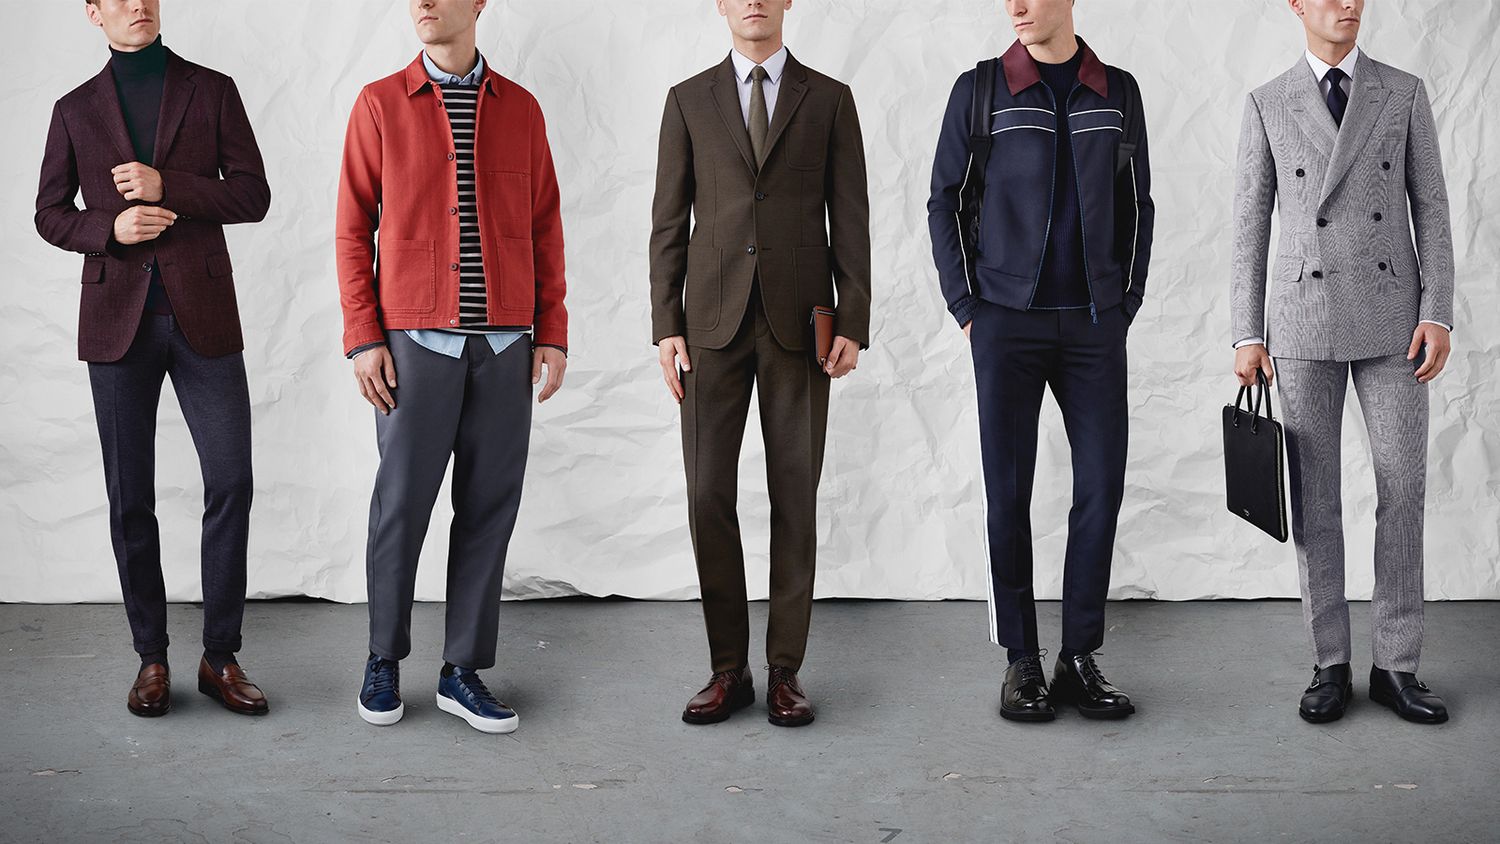 Five models showcasing men’s formal fashion